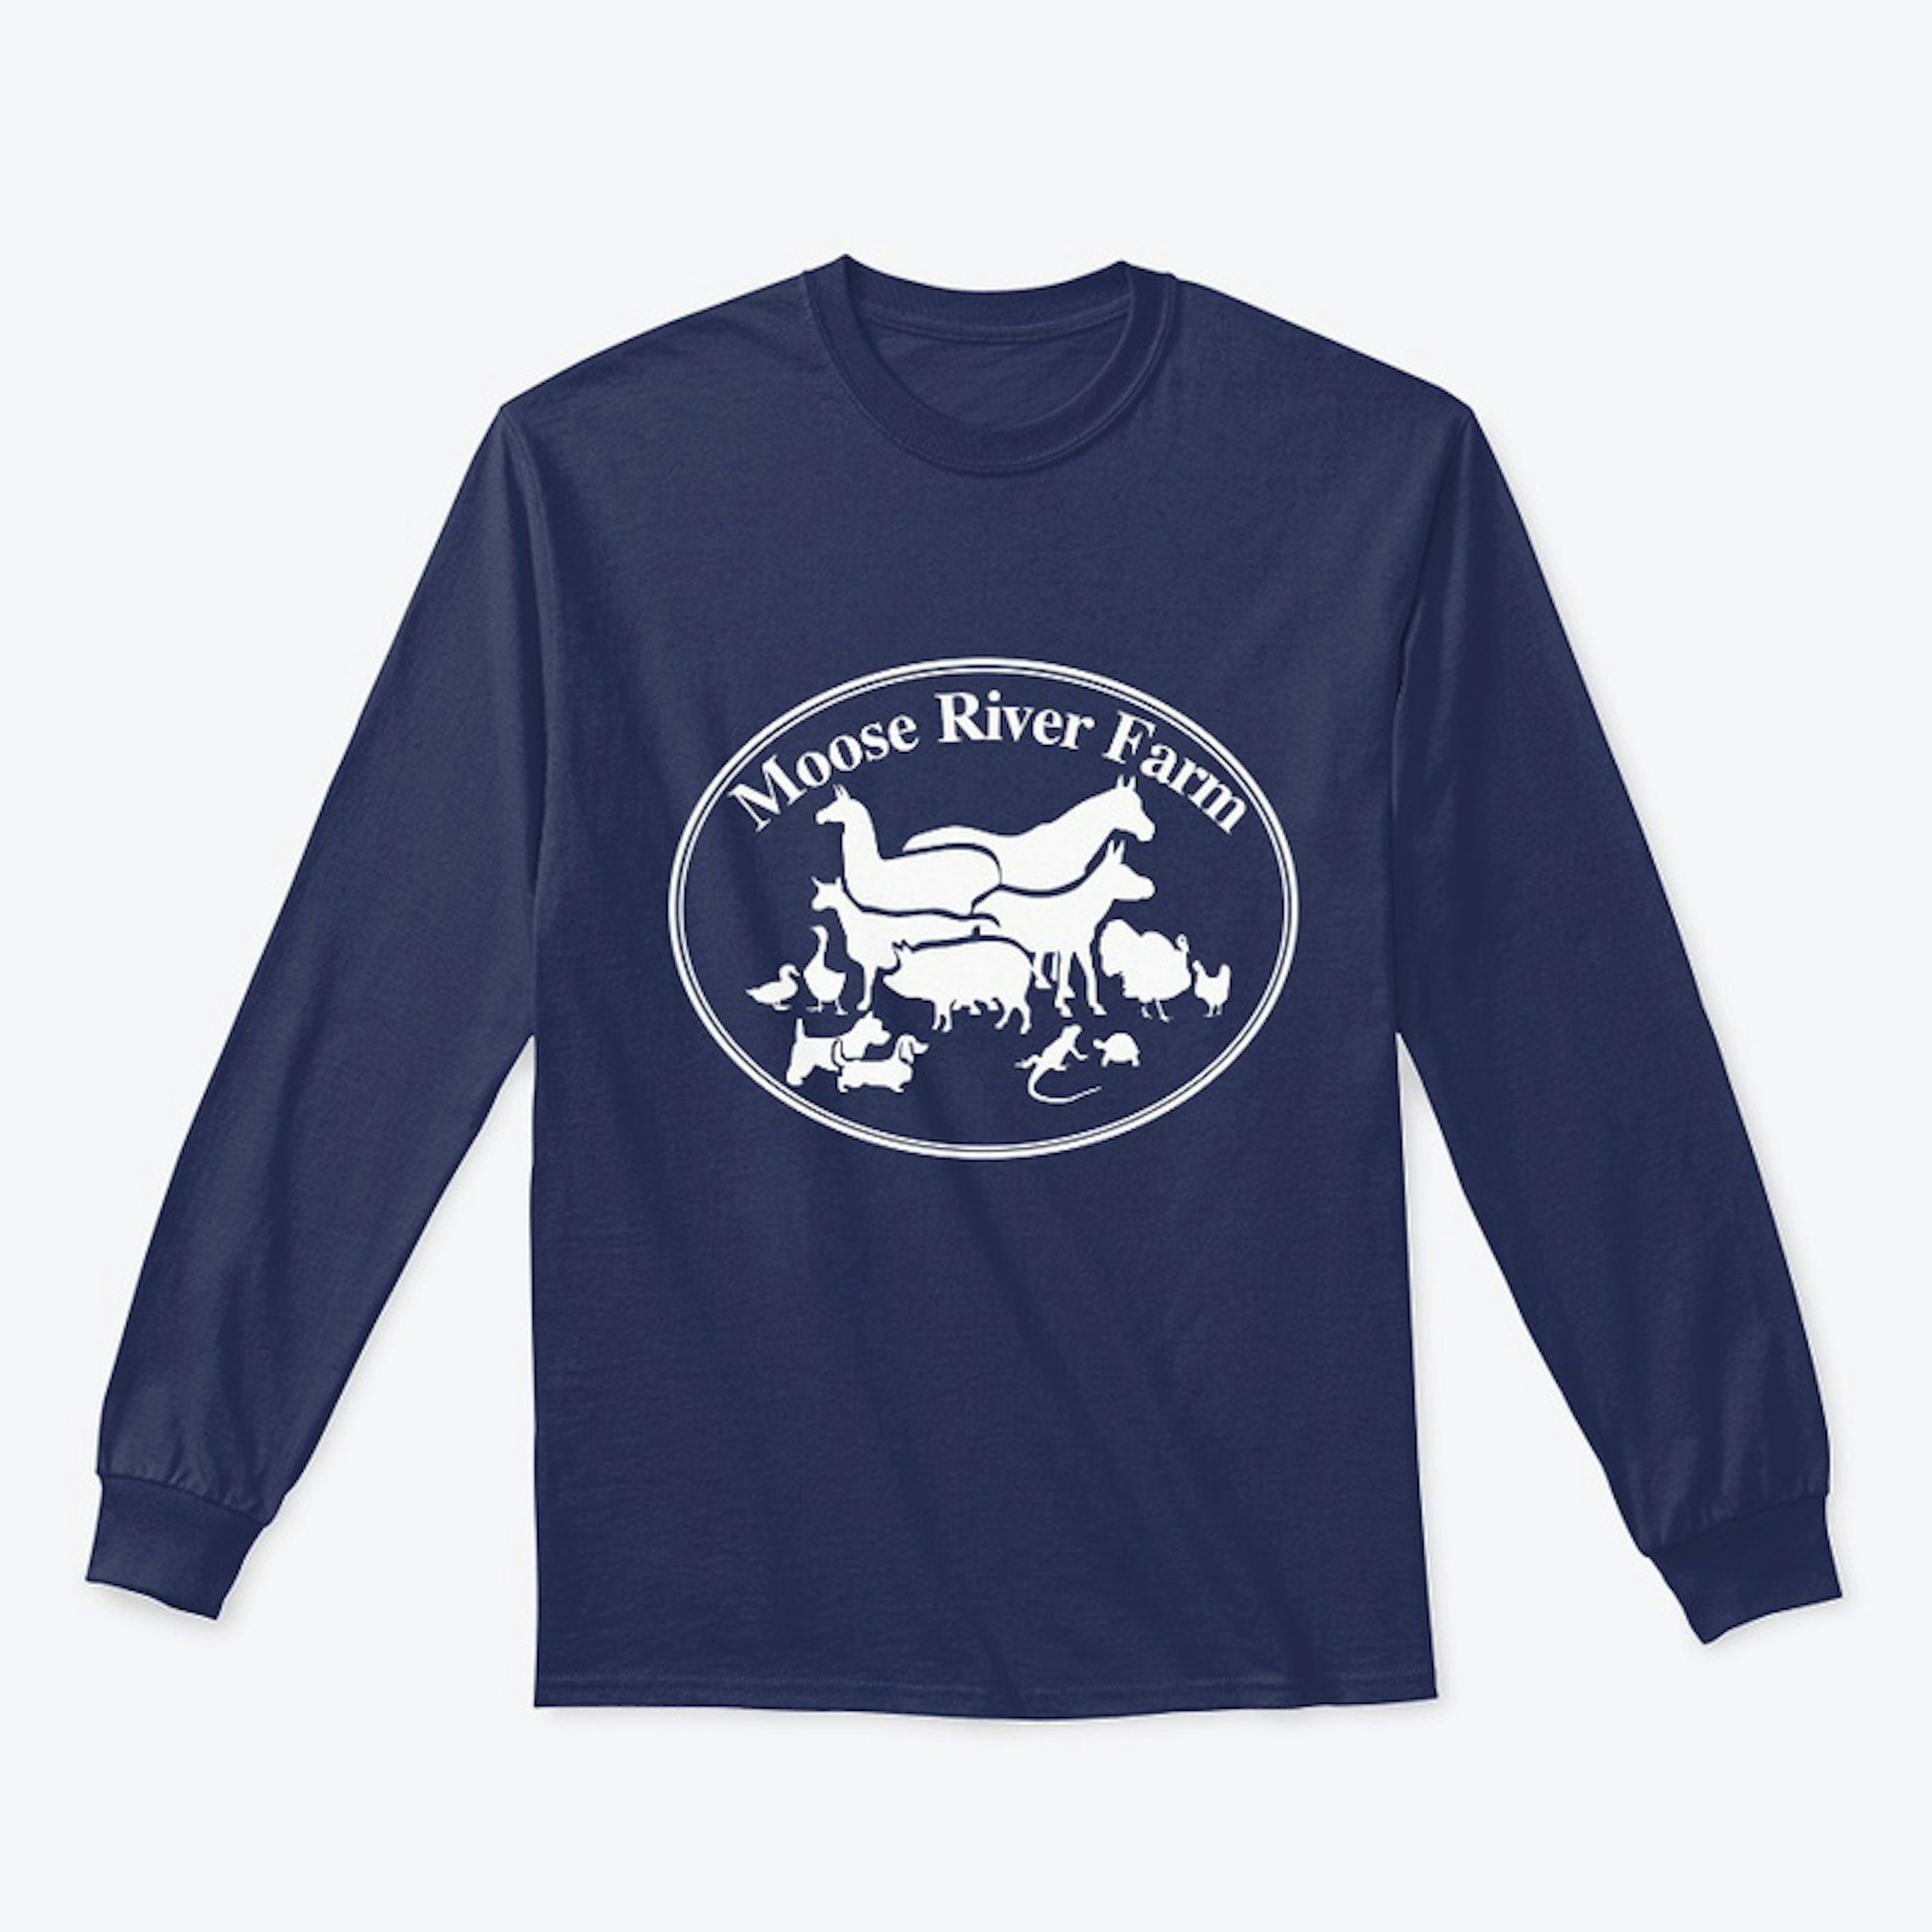 Moose River Farm UPDATED LOGO apparel